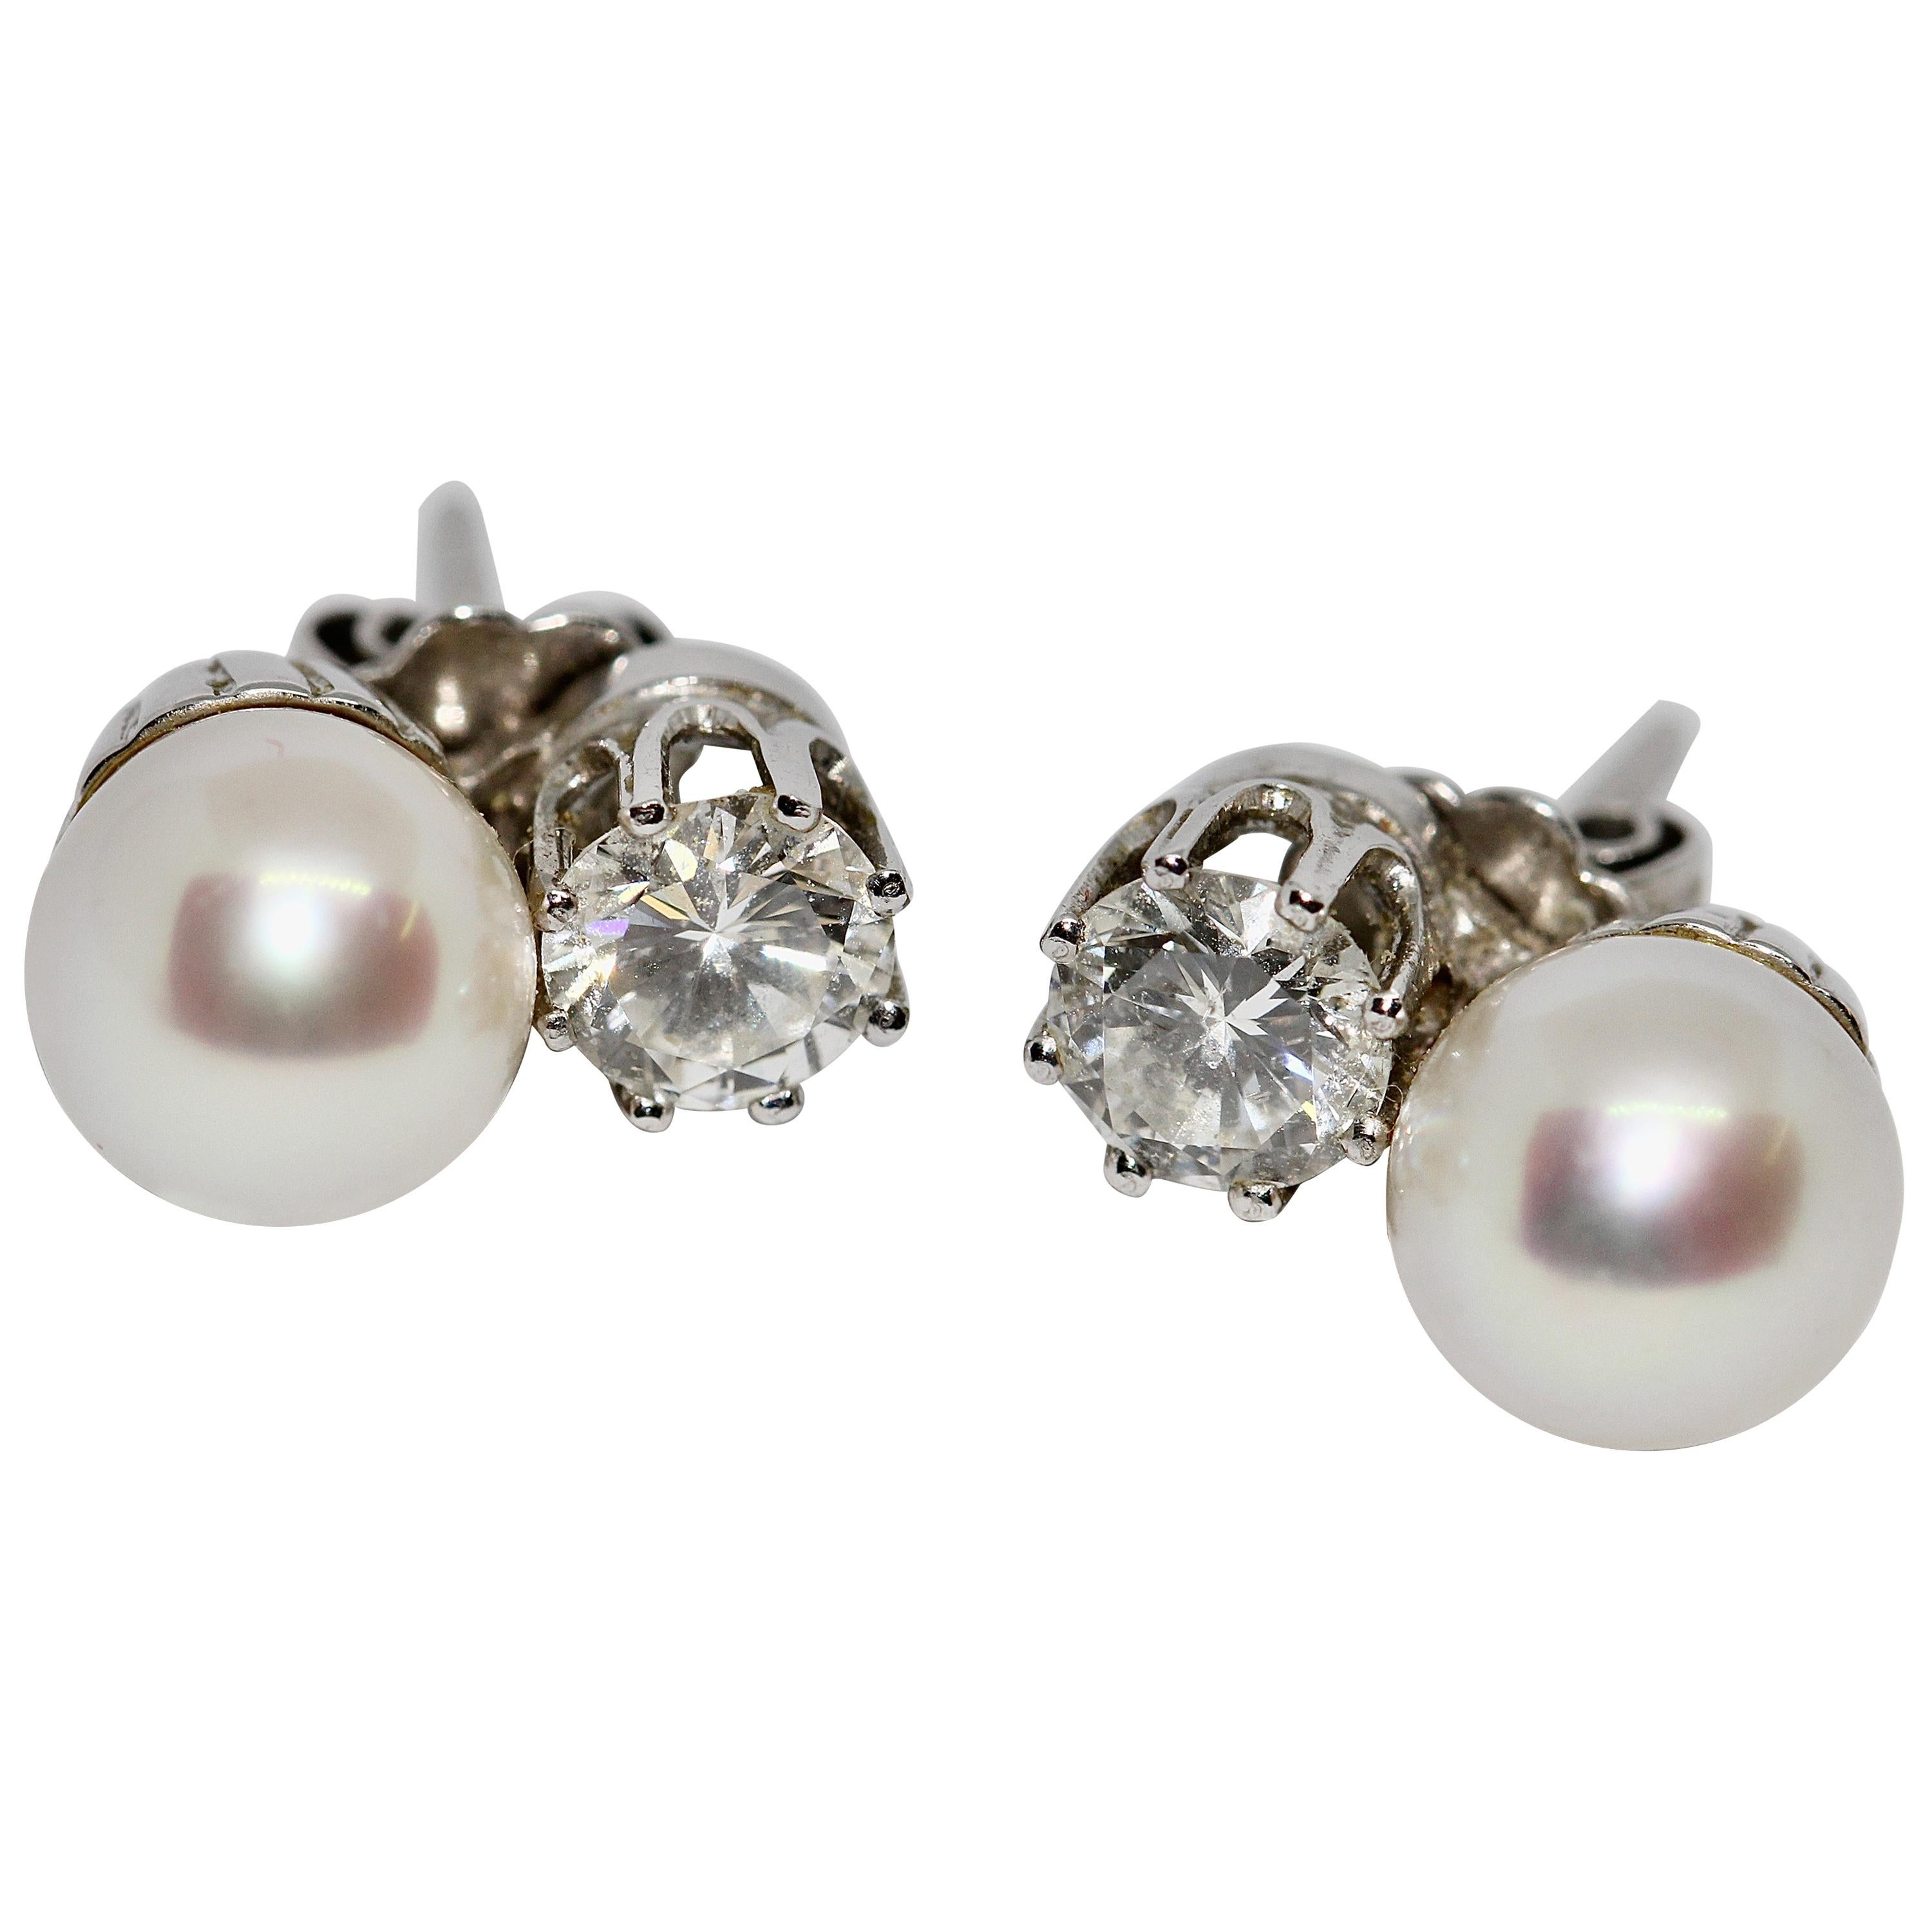 White Gold, Ladies Diamond Stud Earrings with Pearls